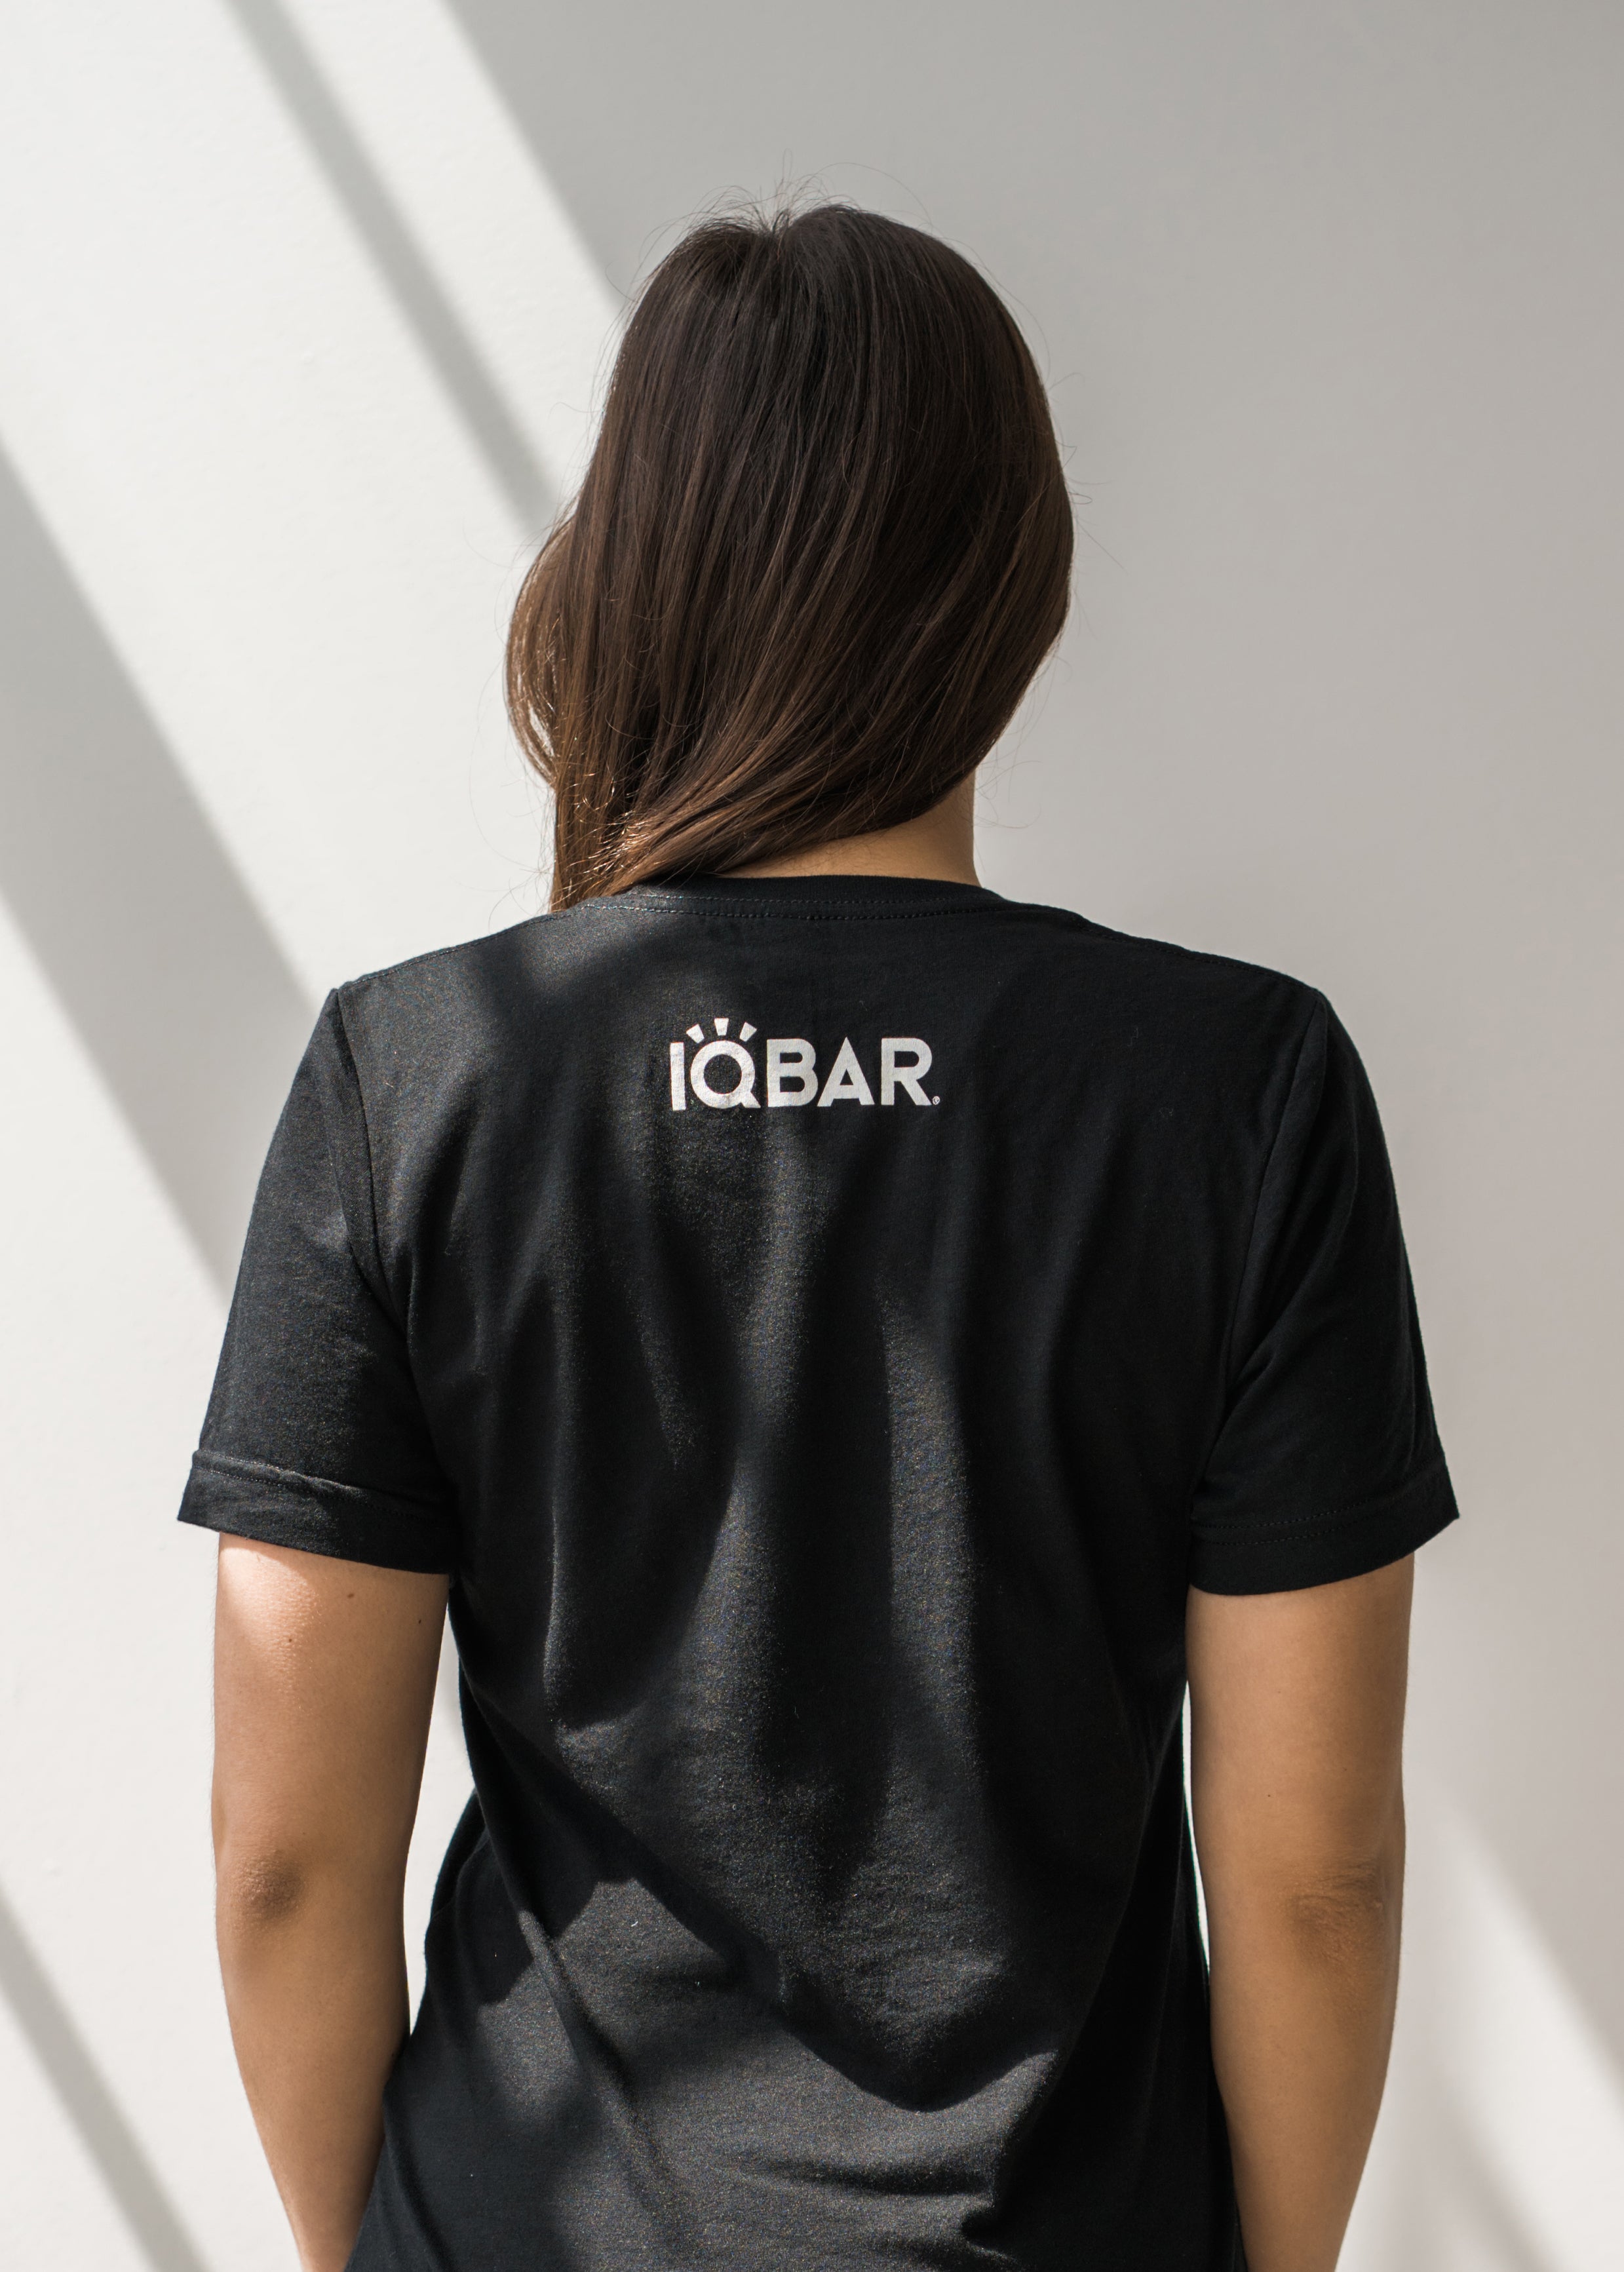 IQBAR Unisex Triblend T-Shirt